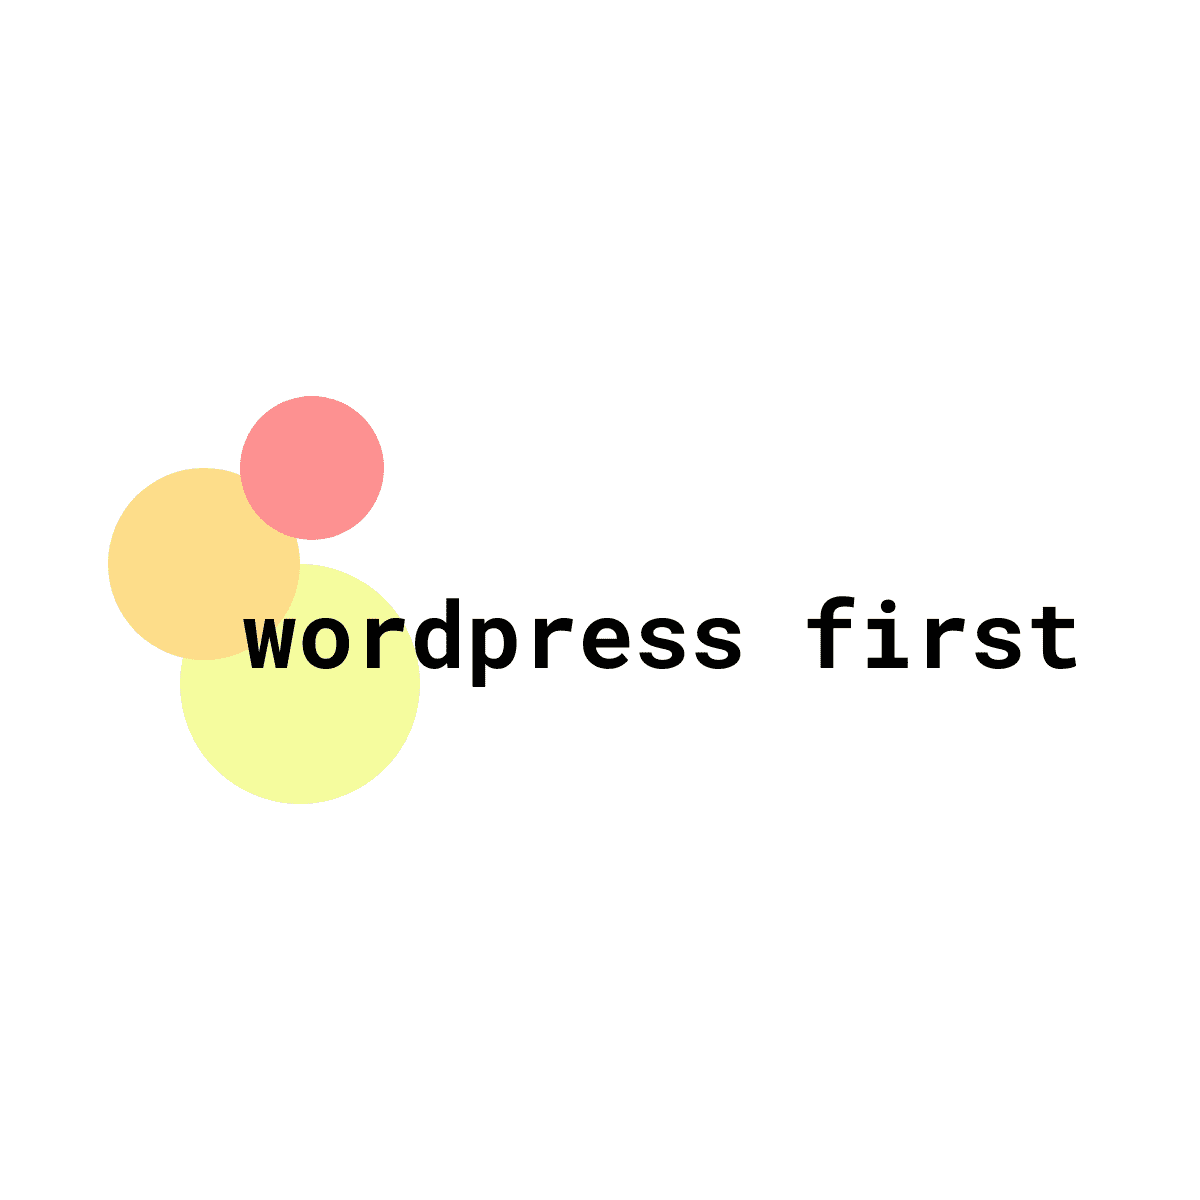 wordpress first